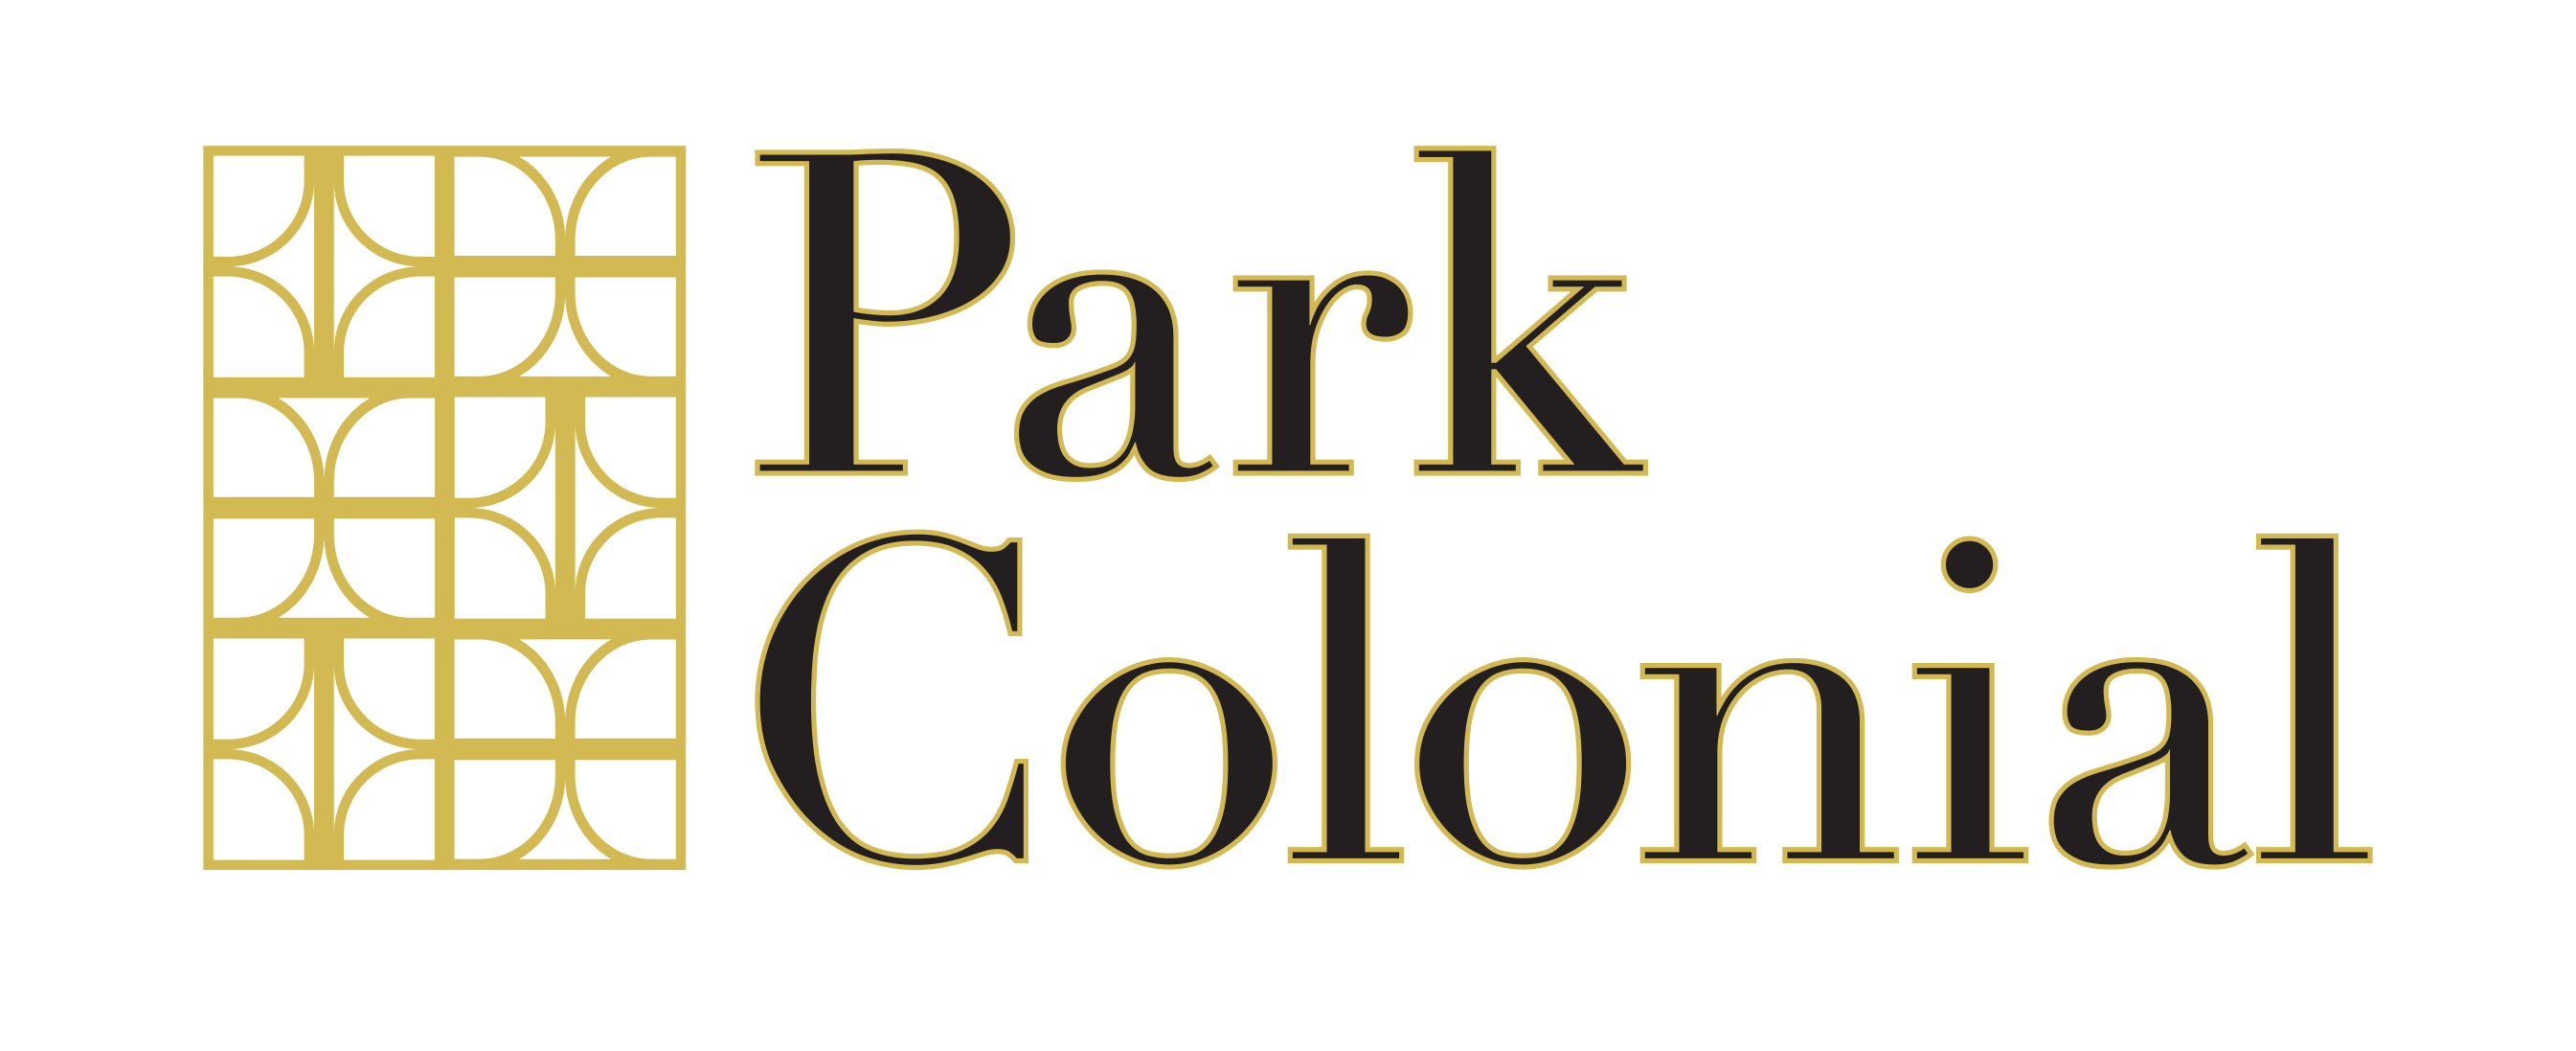 Park Colonial official logo